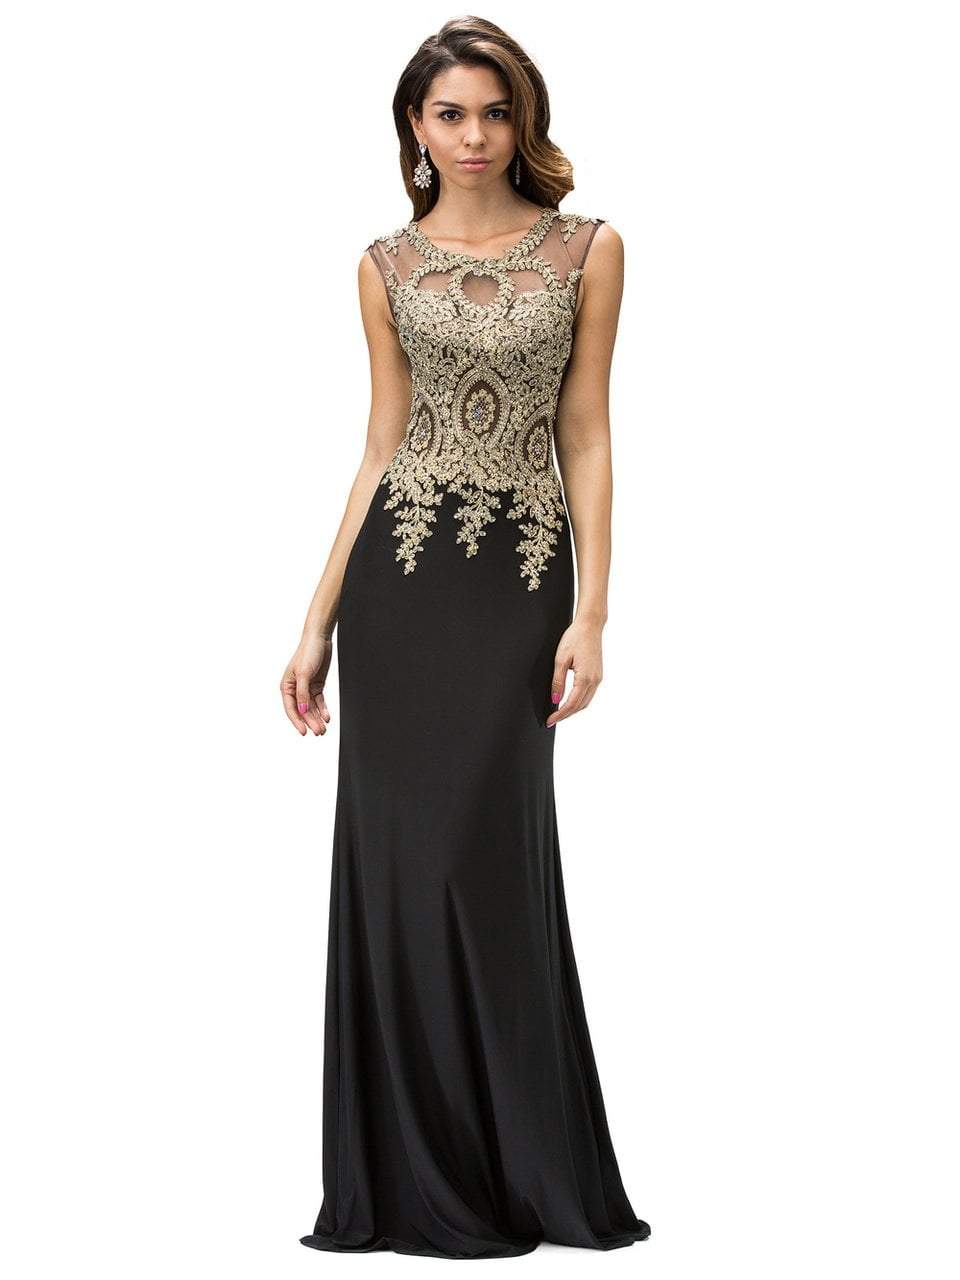 Dancing Queen - Sheer Cap Sleeves Gold Tone Lace Applique Gown  in Black